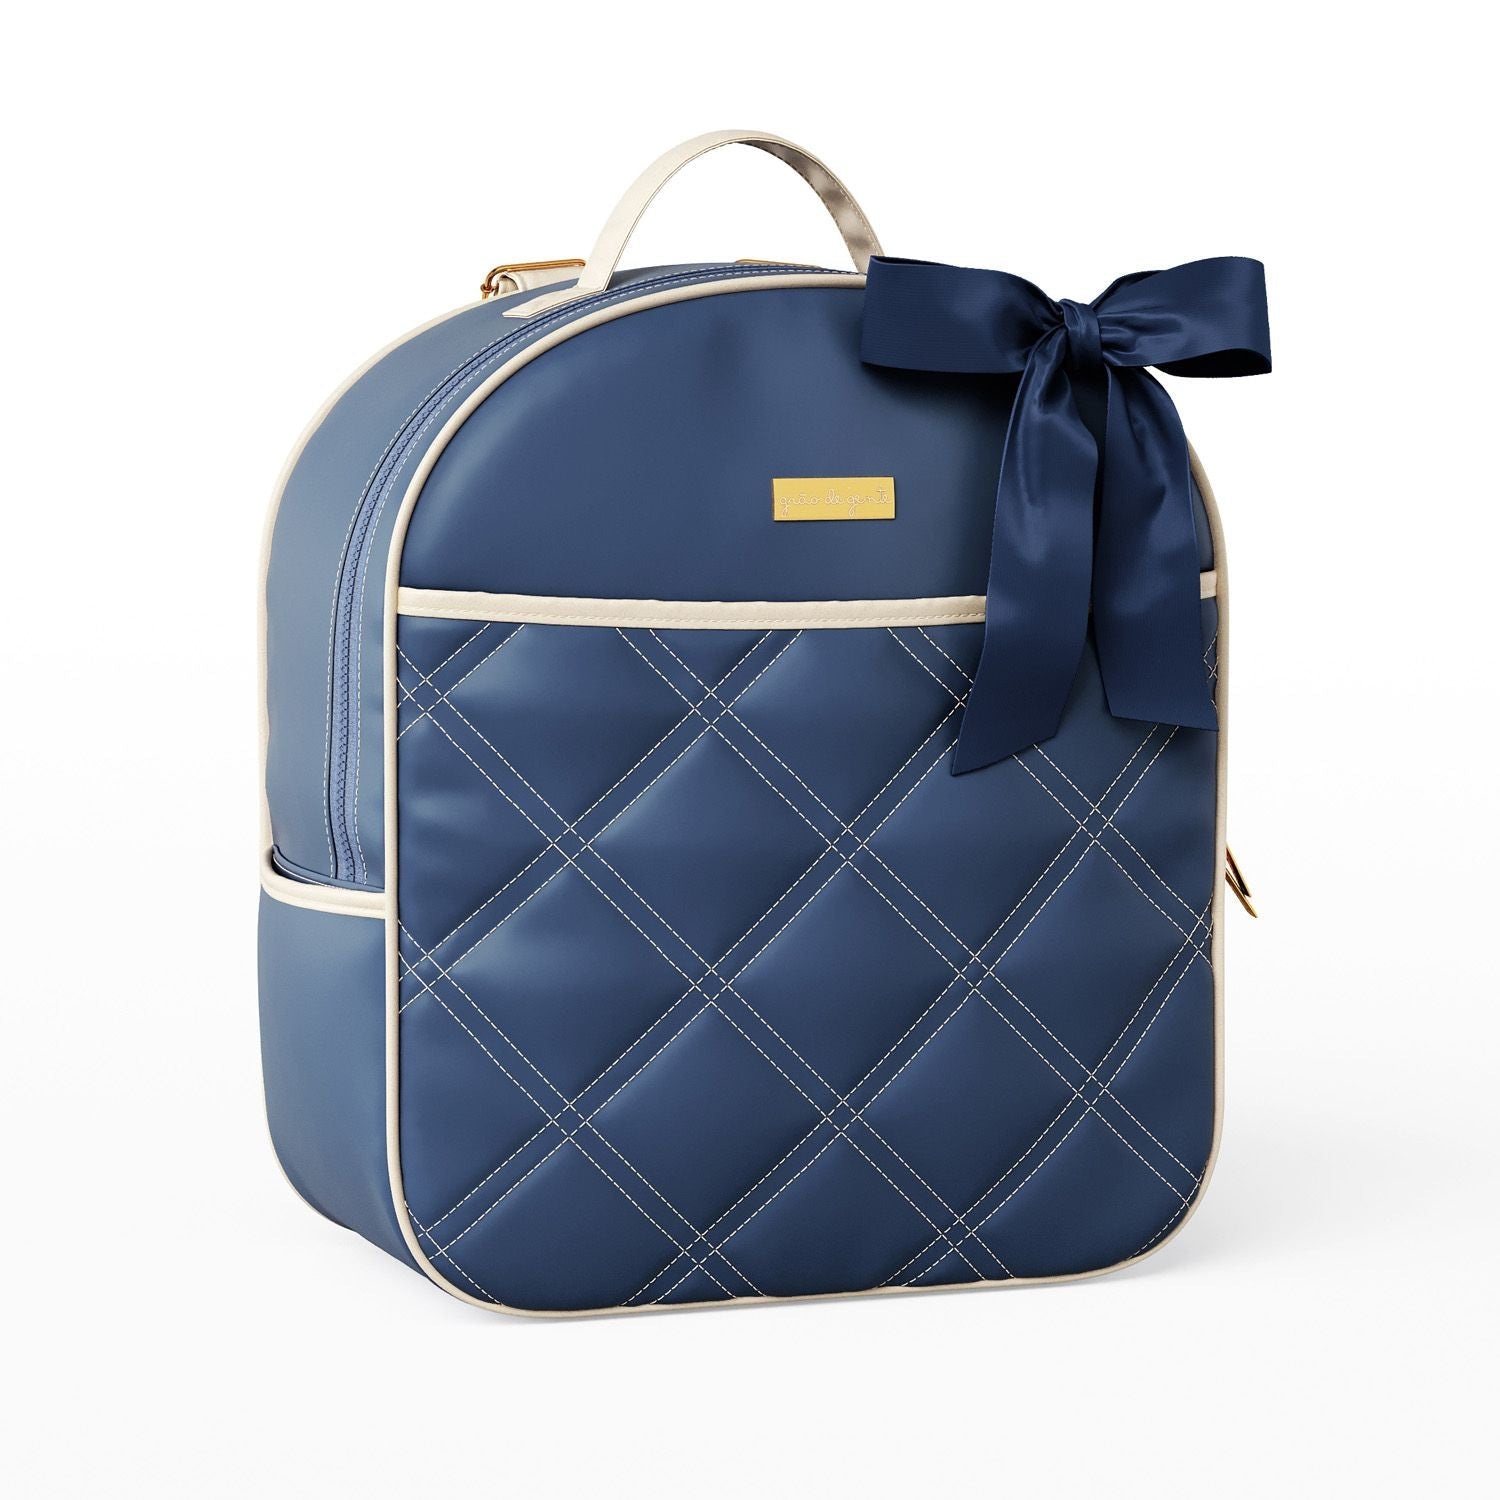 3 Piece Navy Blue and Beige Luxury Diaper Bag Set